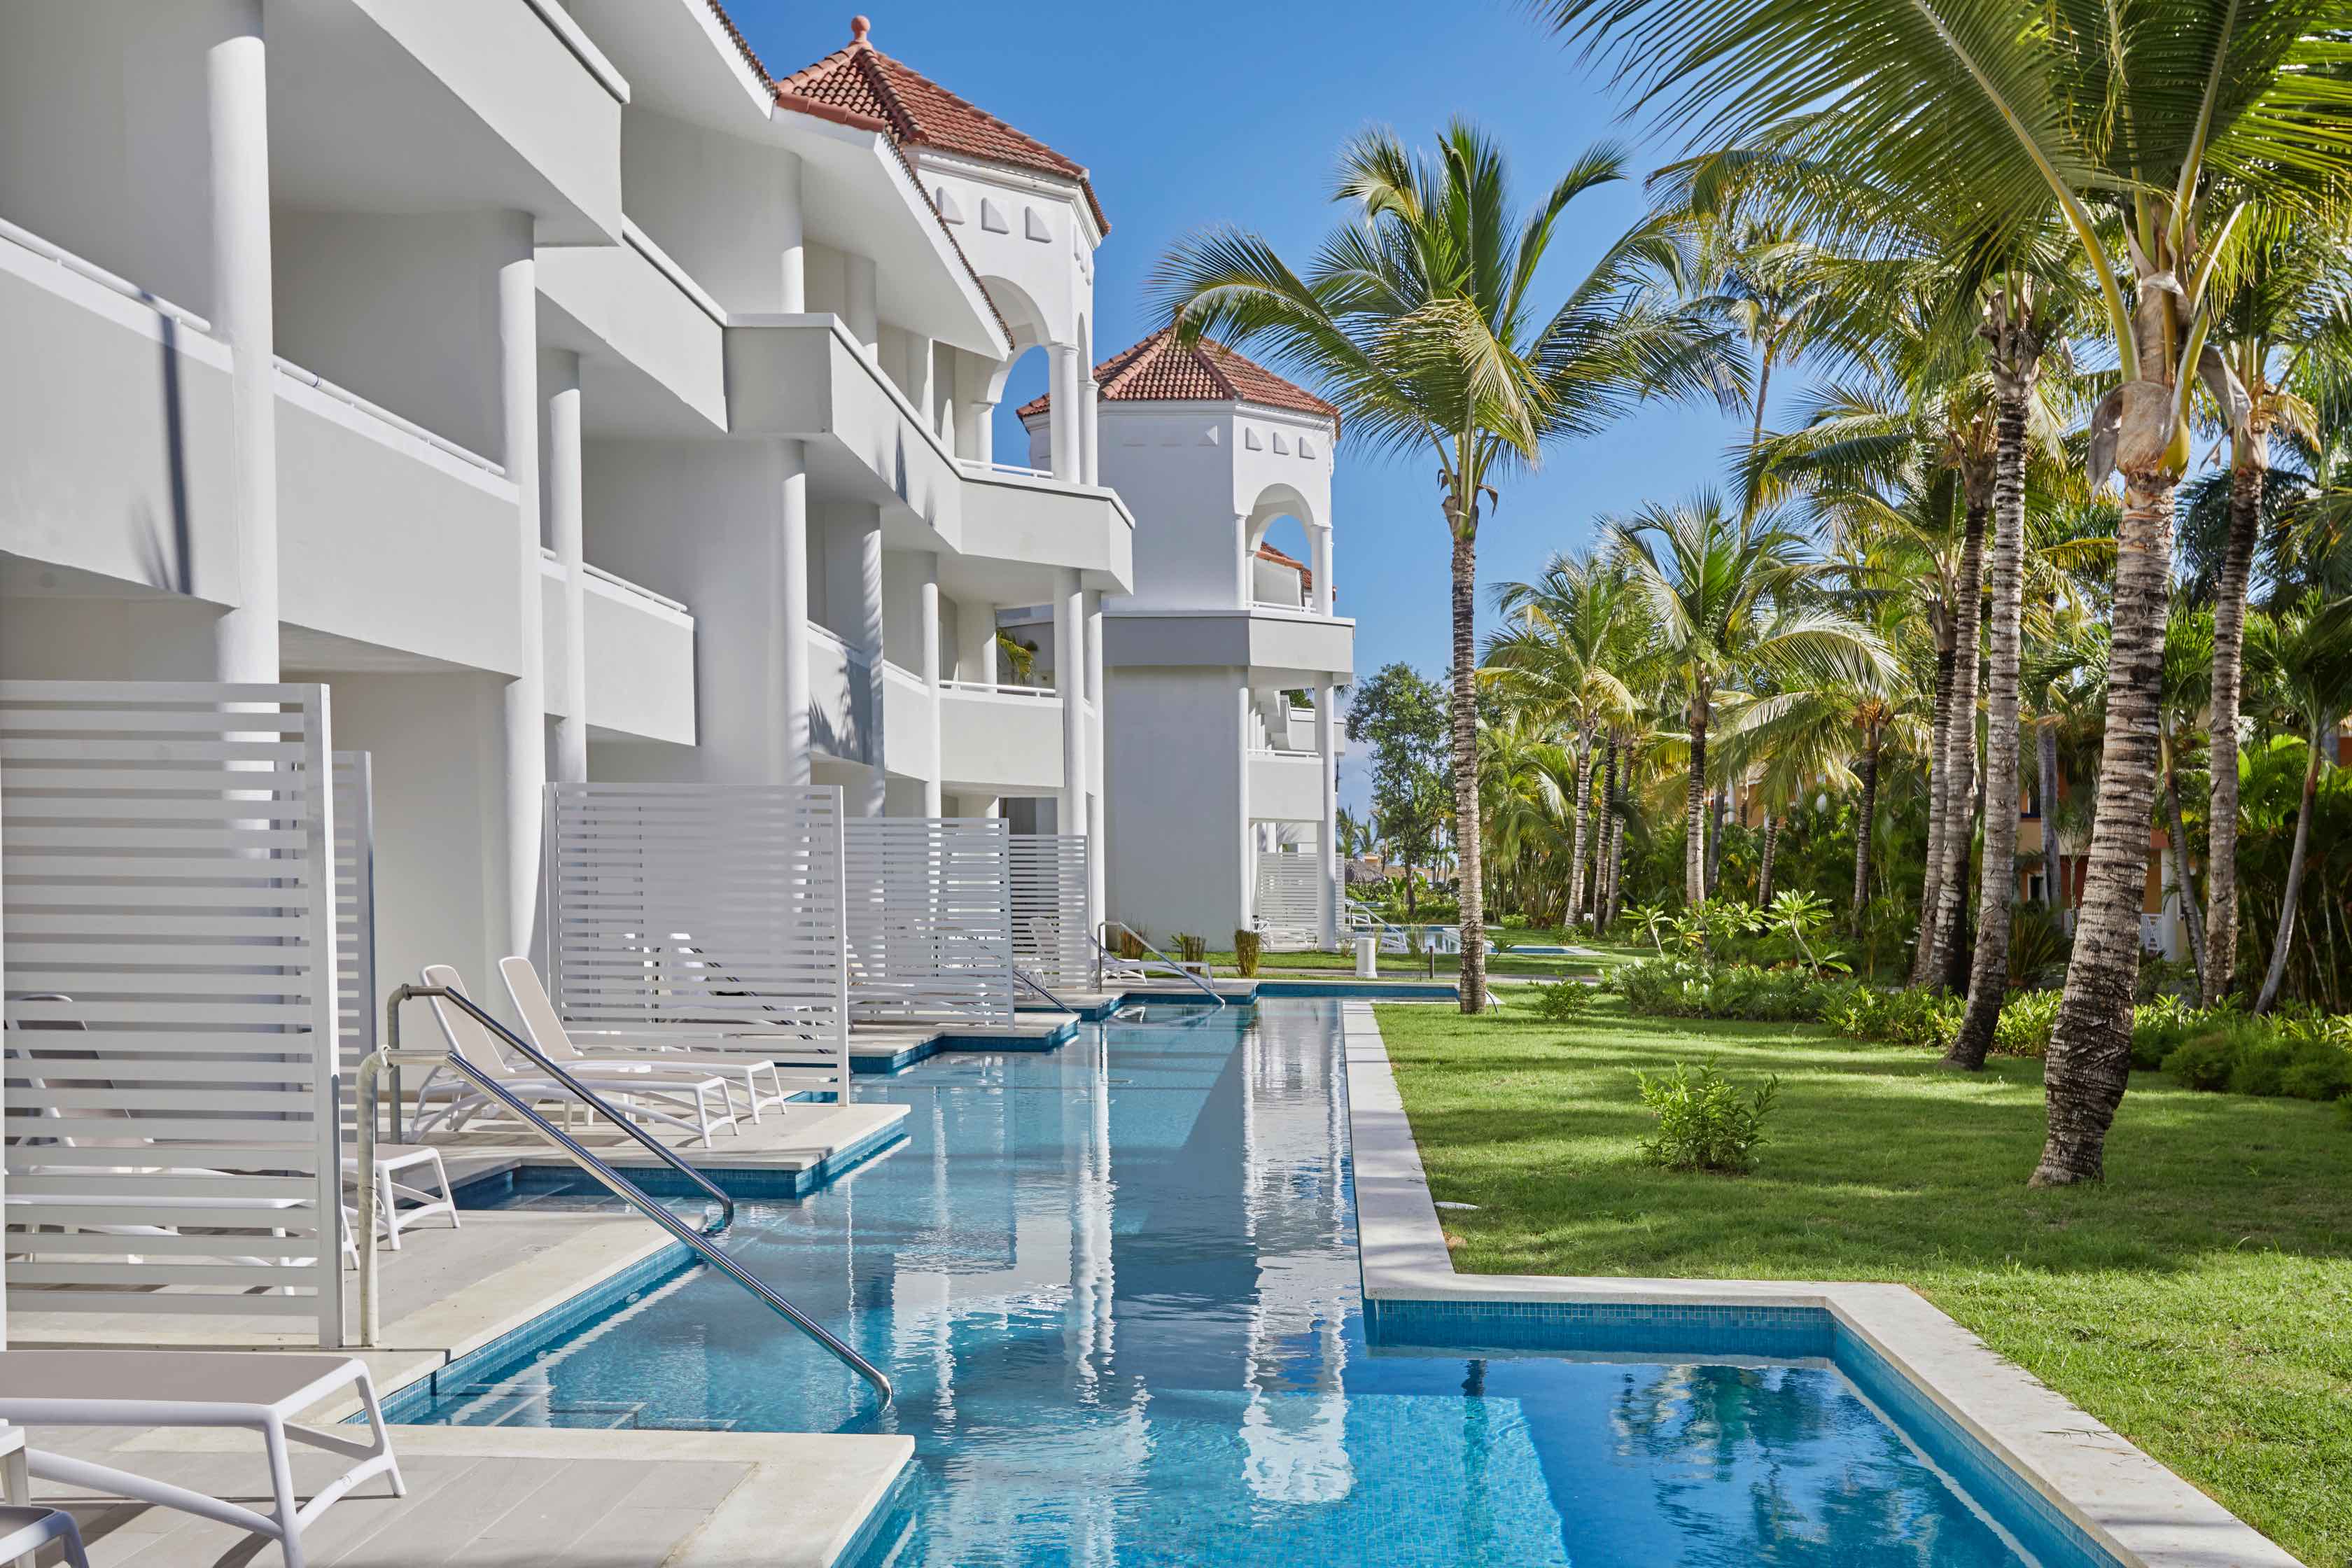 Hotel Bahia Principe Ambar Доминикана. Амбар Хотель. Gran Bahia Principe Ambar 5. Luxury day